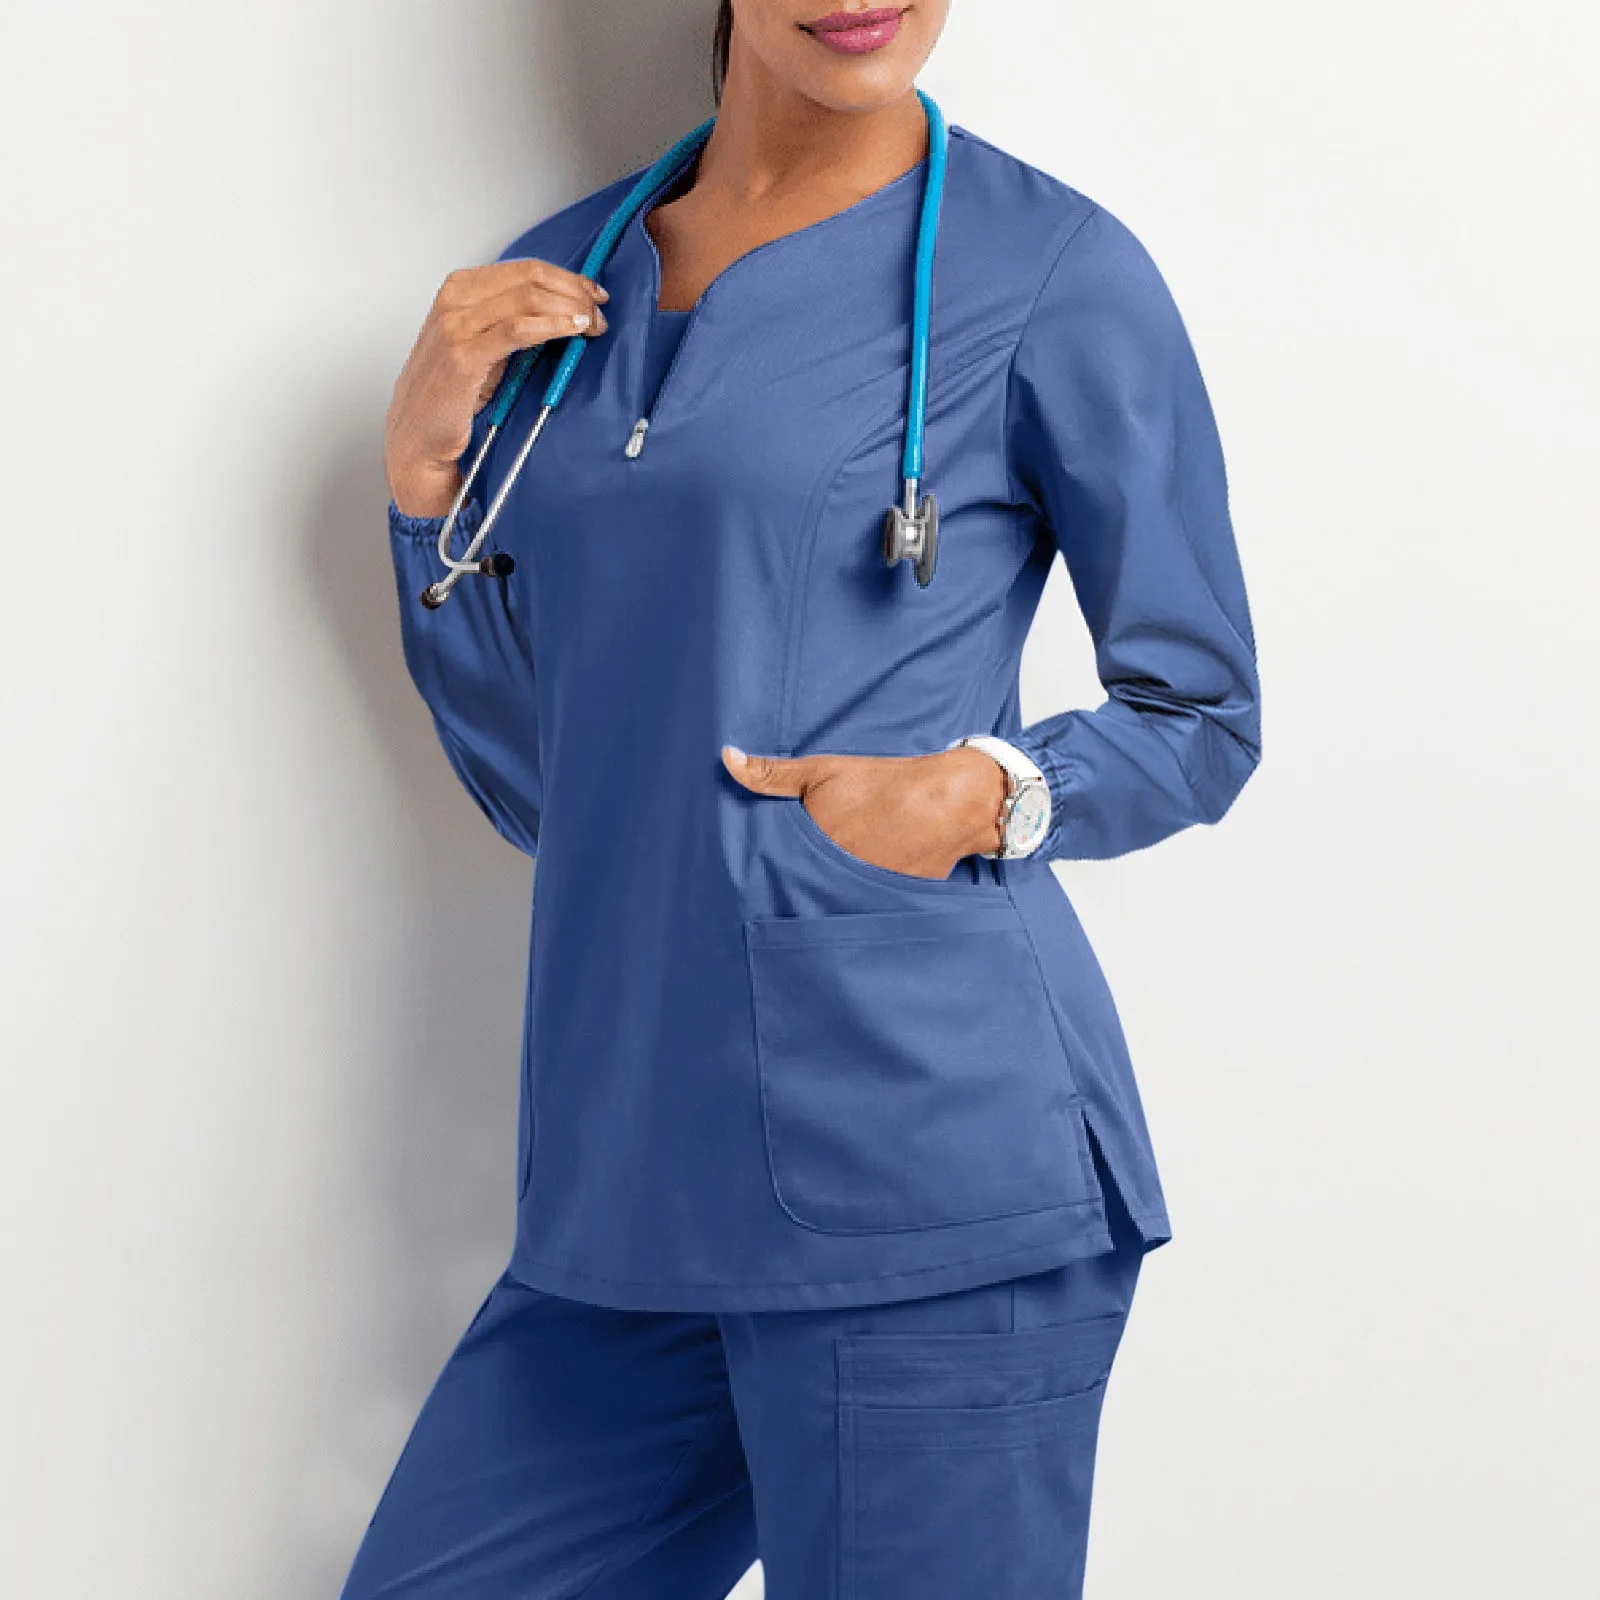 Nurse Scrubs Tops Women'S Healthcare Solid Workers Long Sleeve Blouses Hospital Pocket Uniform Nurseing Overalls Pharmacist Top